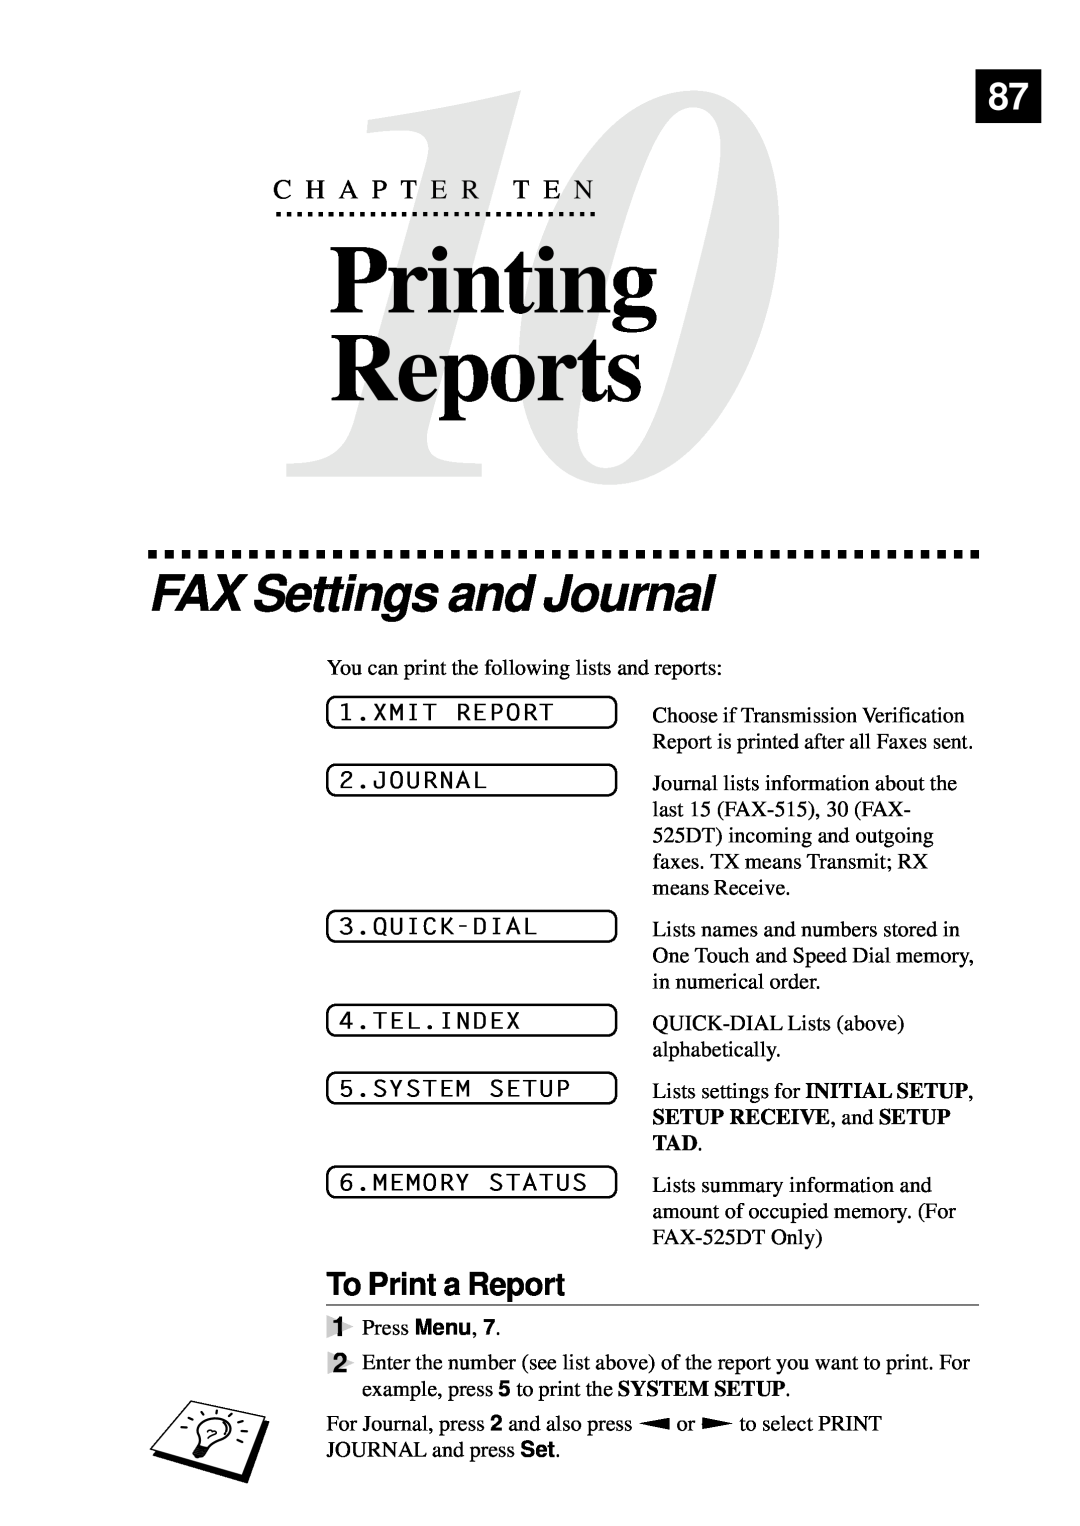 Brother 515 manual Printing Reports, FAX Settings and Journal, To Print a Report, C10H A P T E R T E N87, Memory Status 